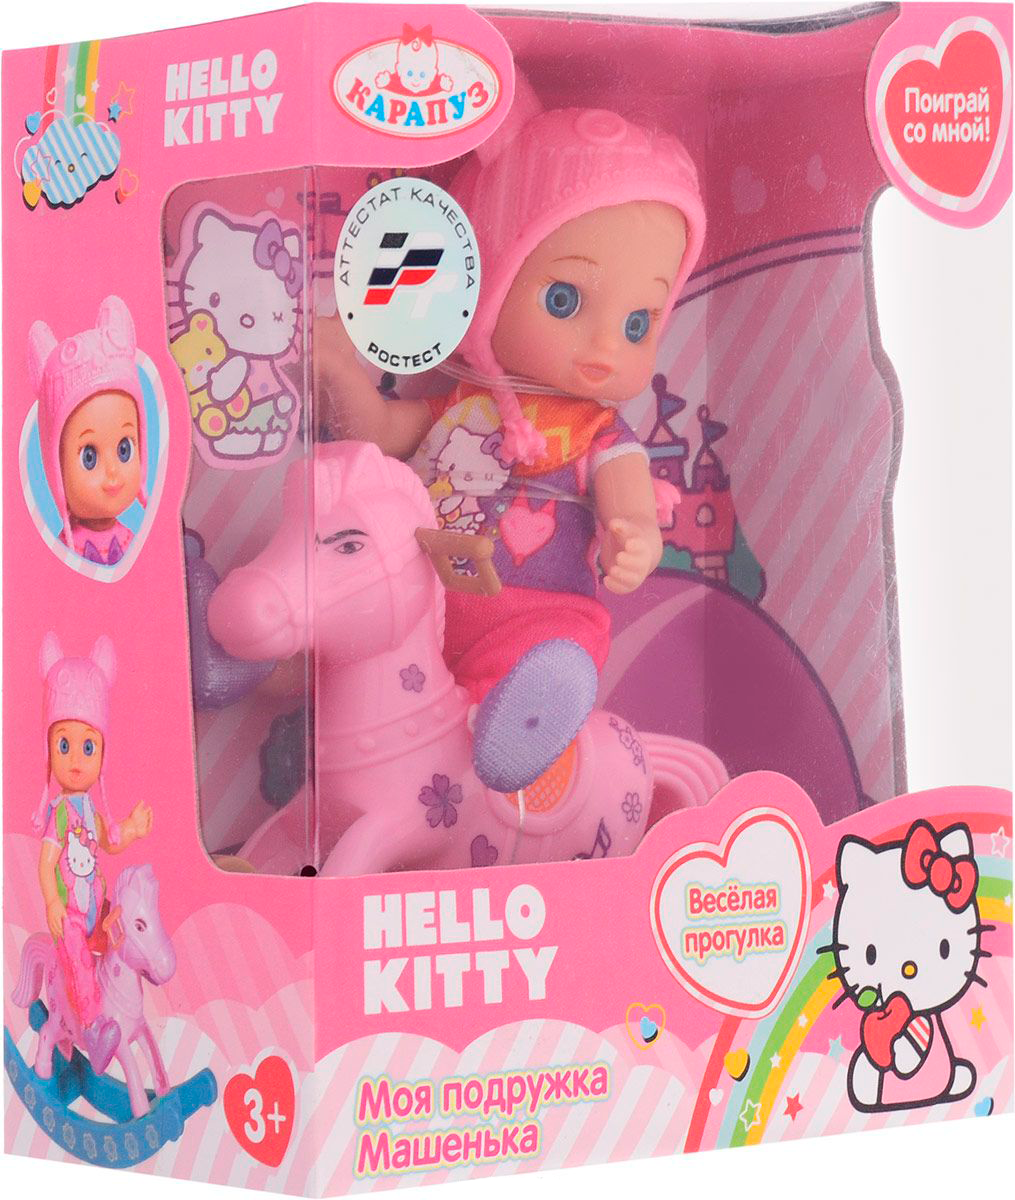 Кукла - Hello Kitty – Моя подружка Машенька, 12 см с аксессуарами  